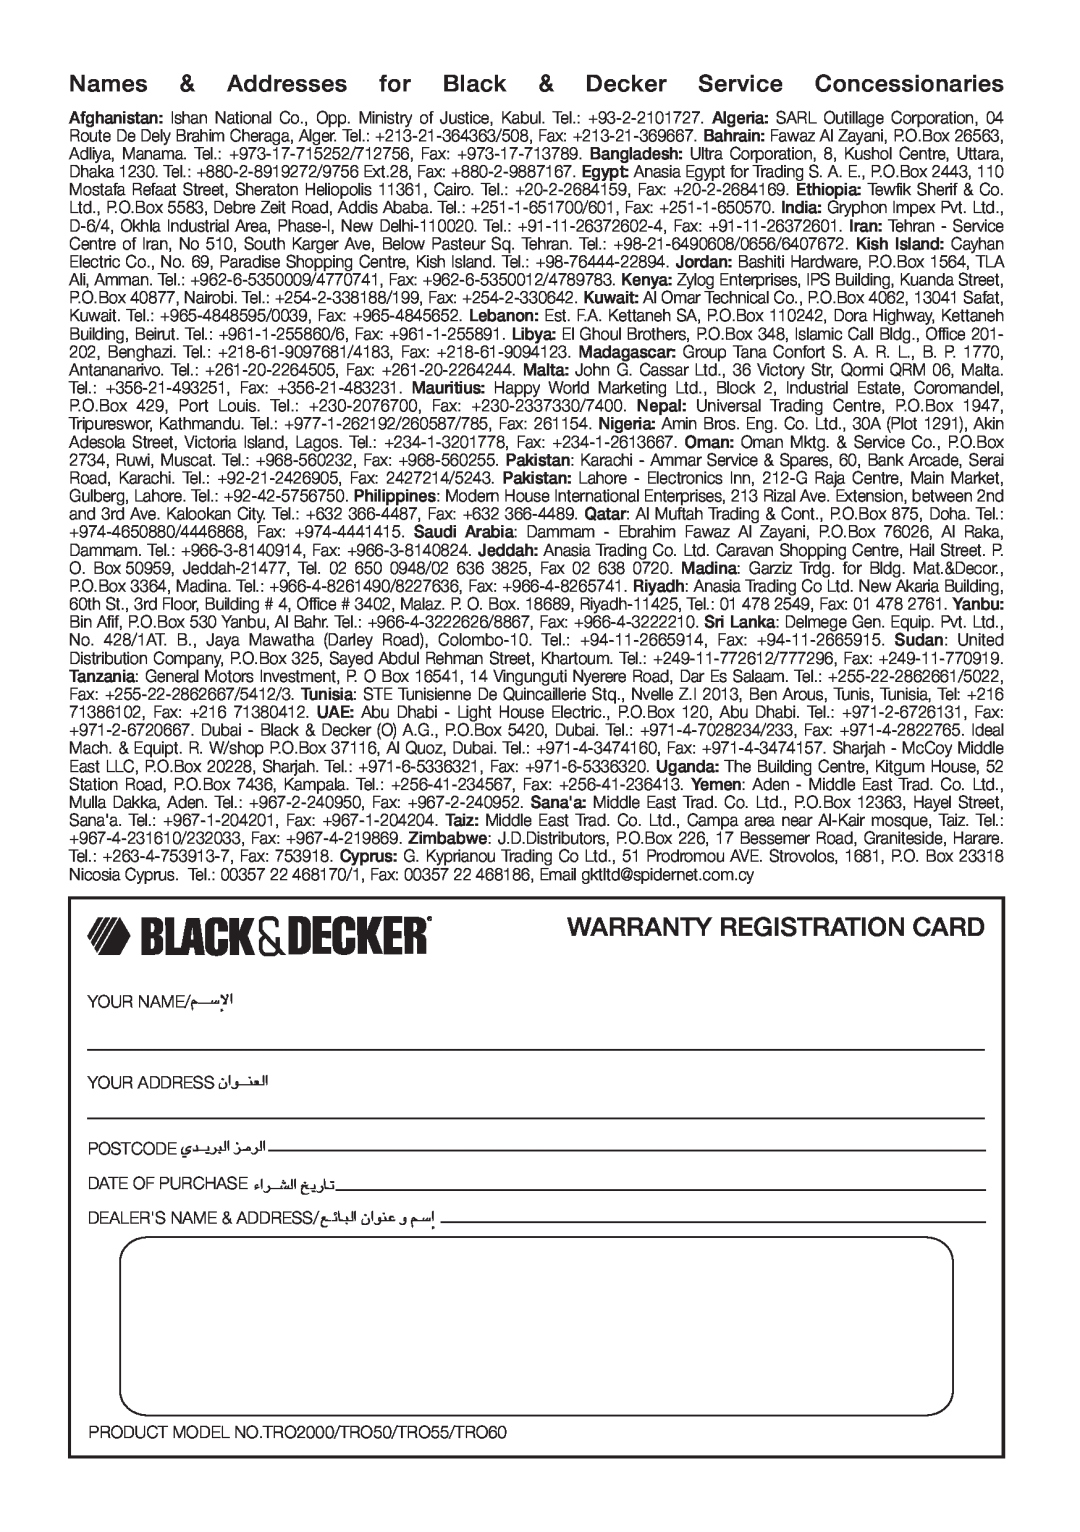 Black & Decker TRO50, TRO55 manual Warranty Registration Card, Names & Addresses for Black & Decker Service Concessionaries 